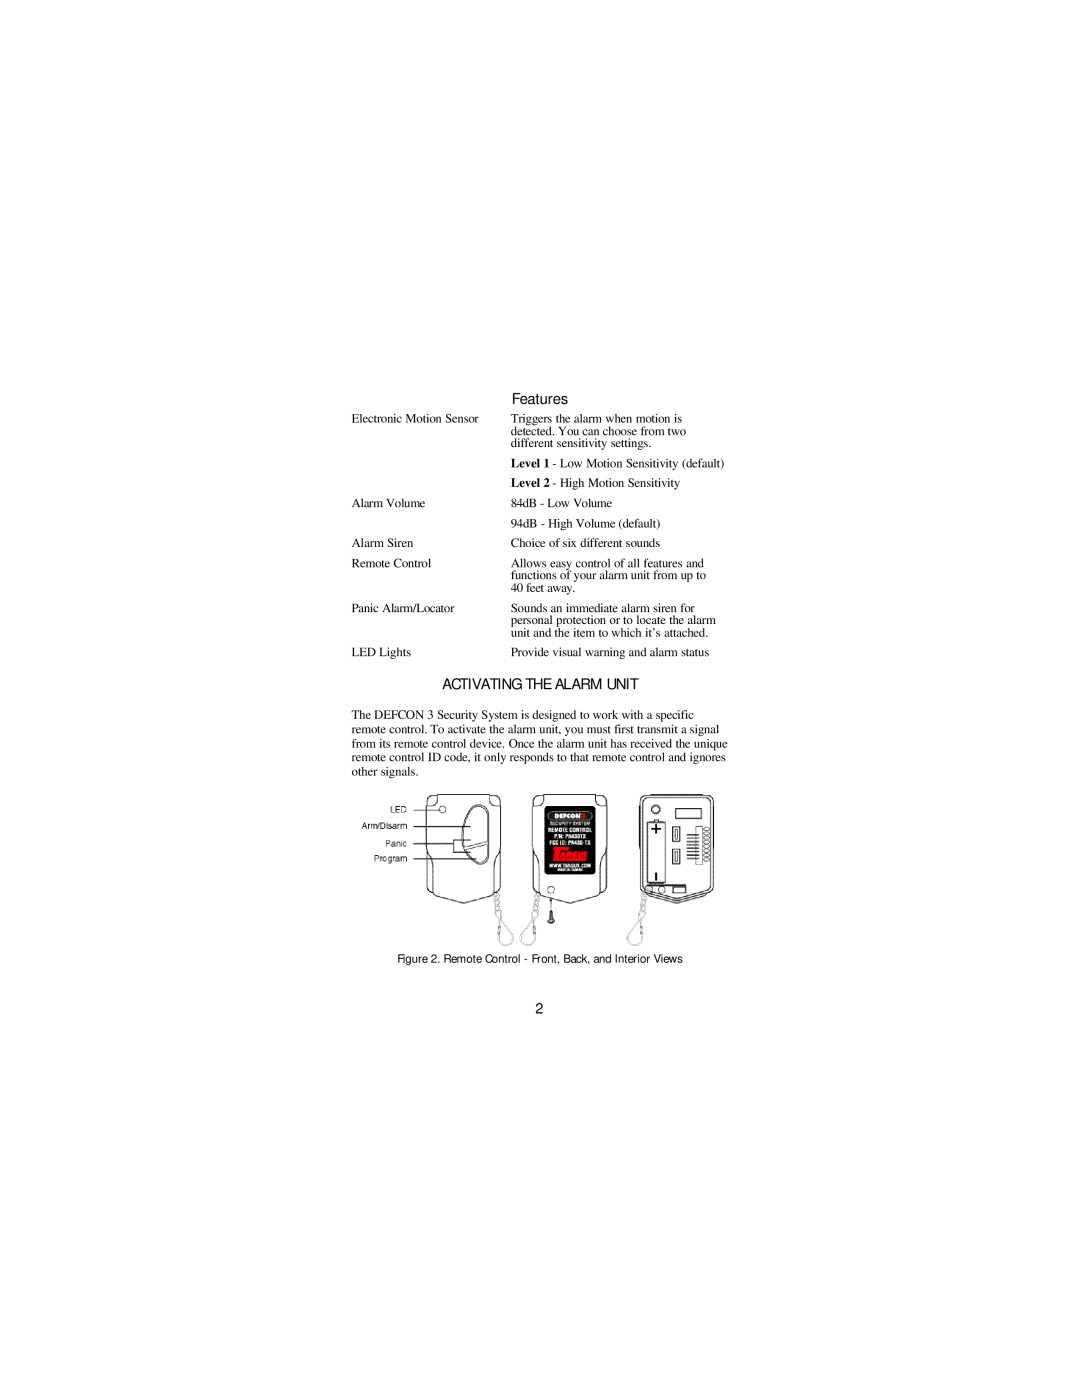 Targus DEFCON 3 manual Features, Activating The Alarm Unit 